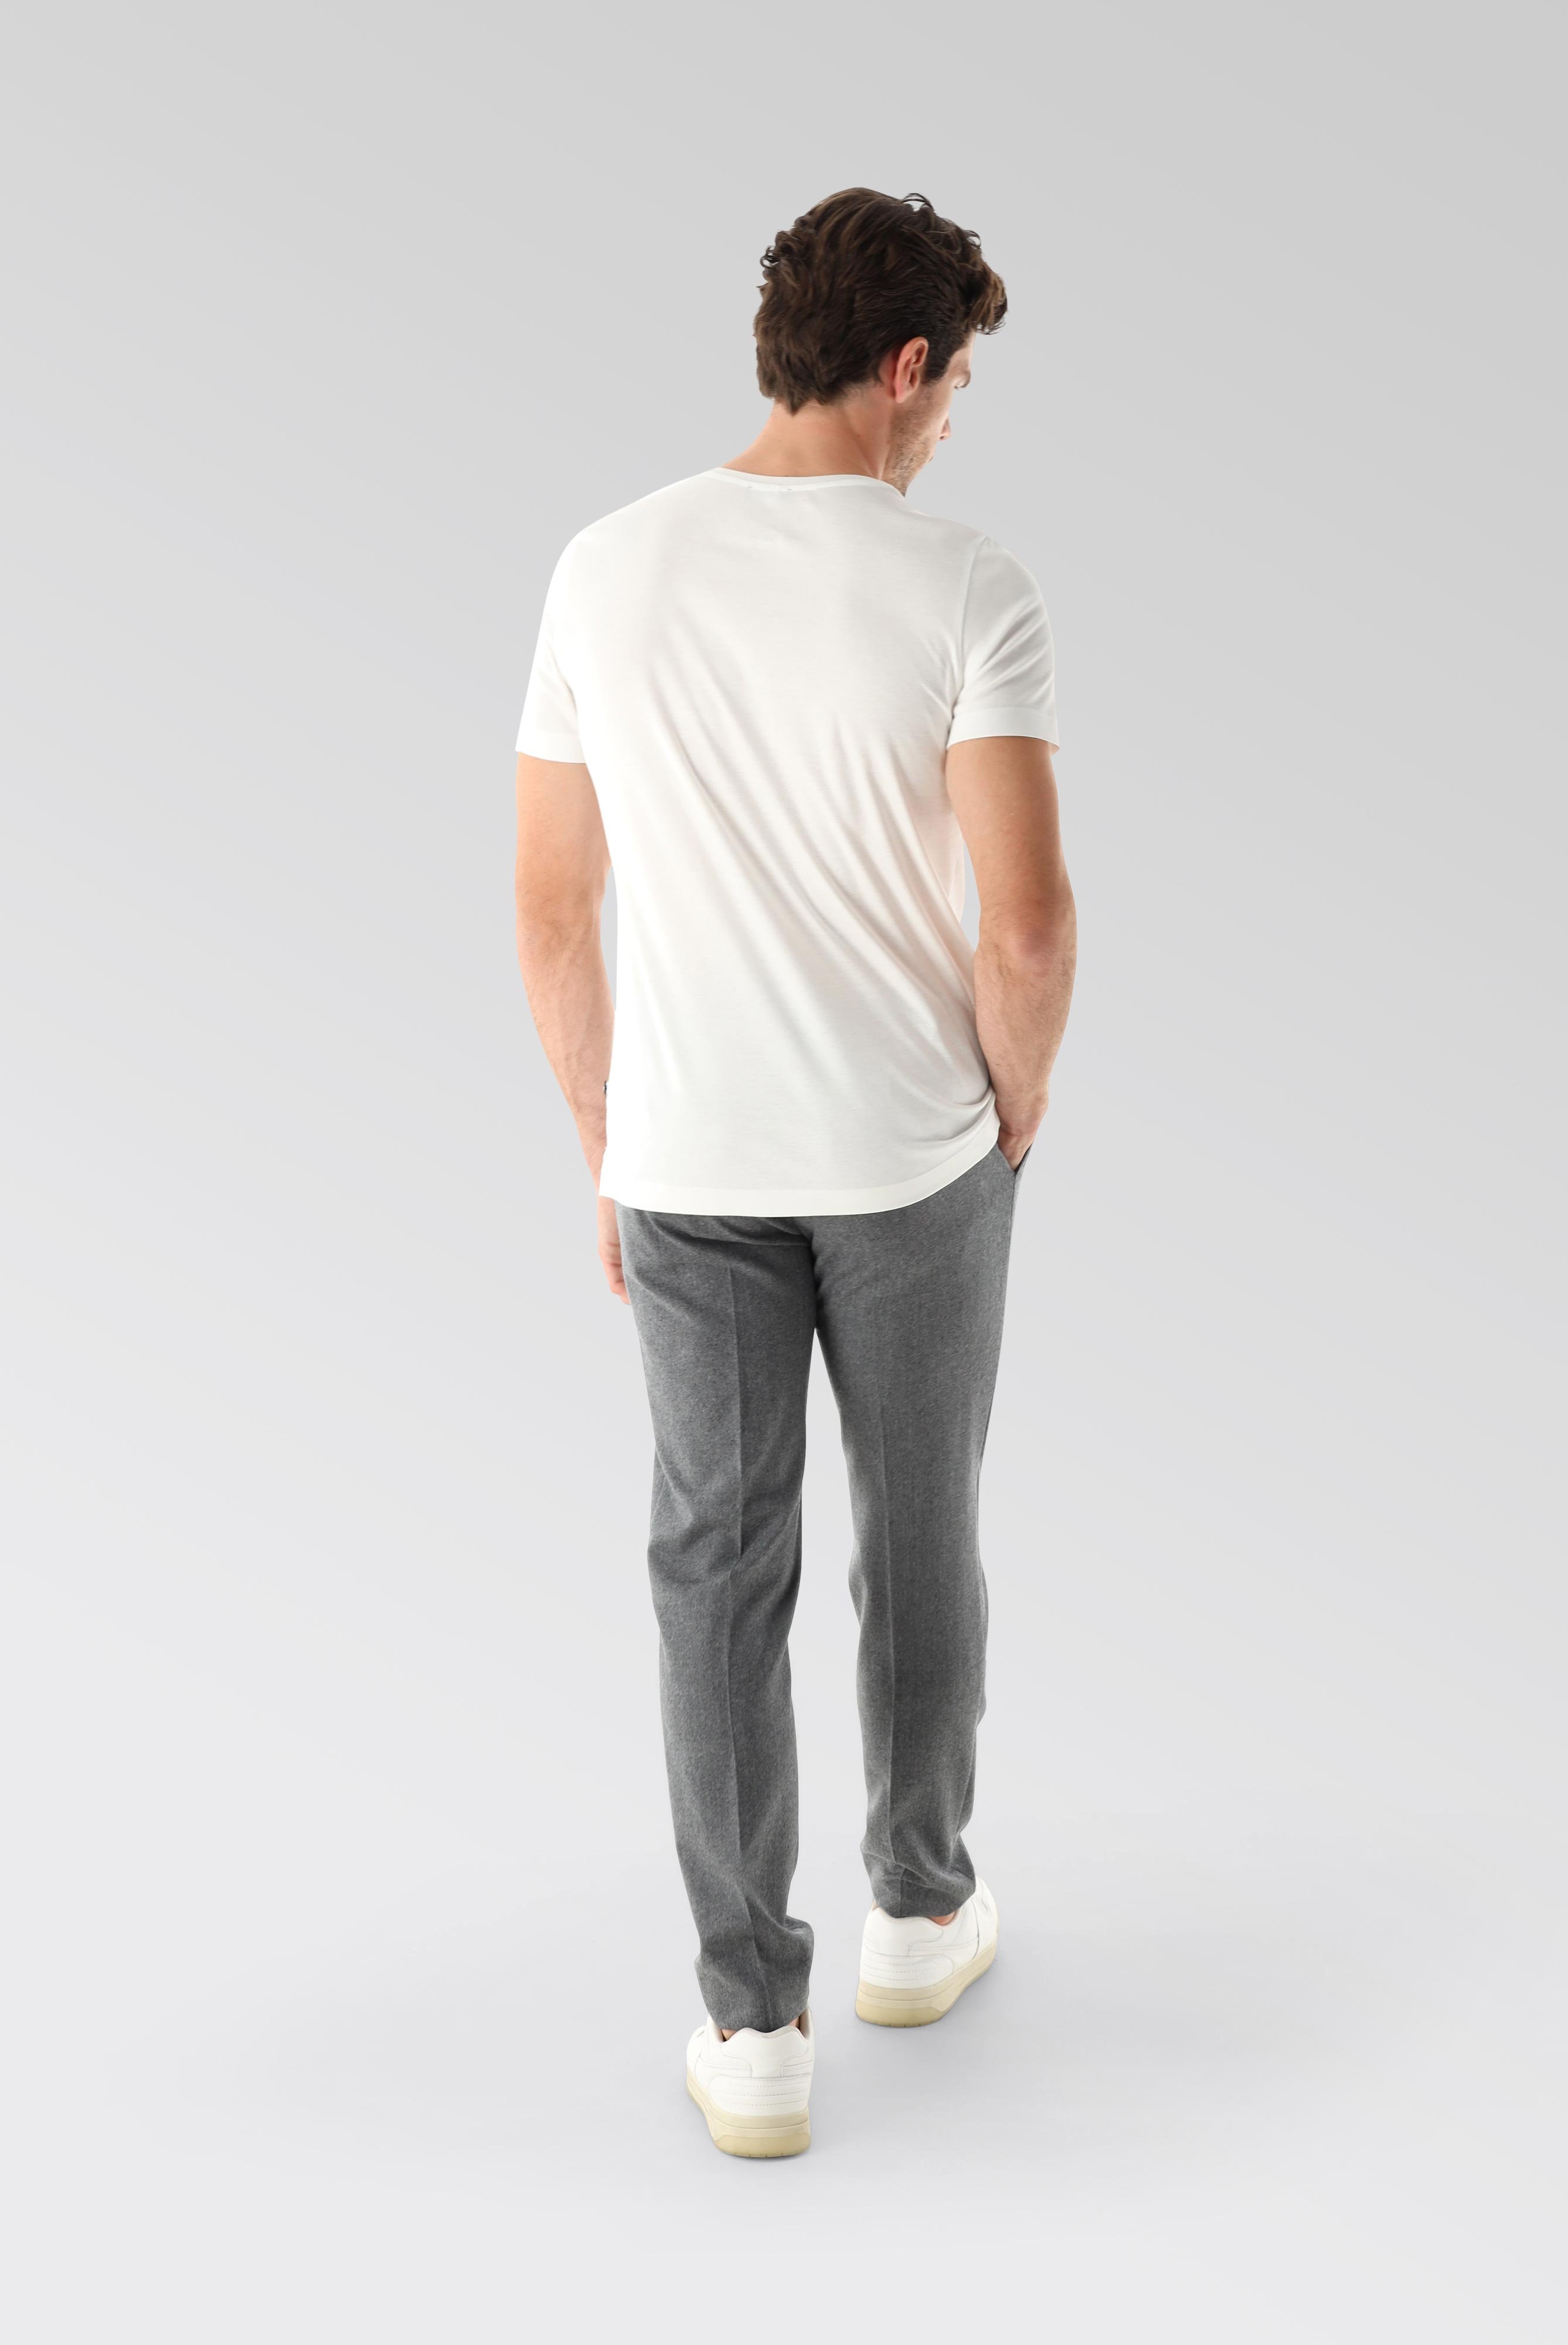 T-Shirts+Swiss Cotton Jersey V-Neck T-Shirt+20.1715.UX.180031.000.X4L